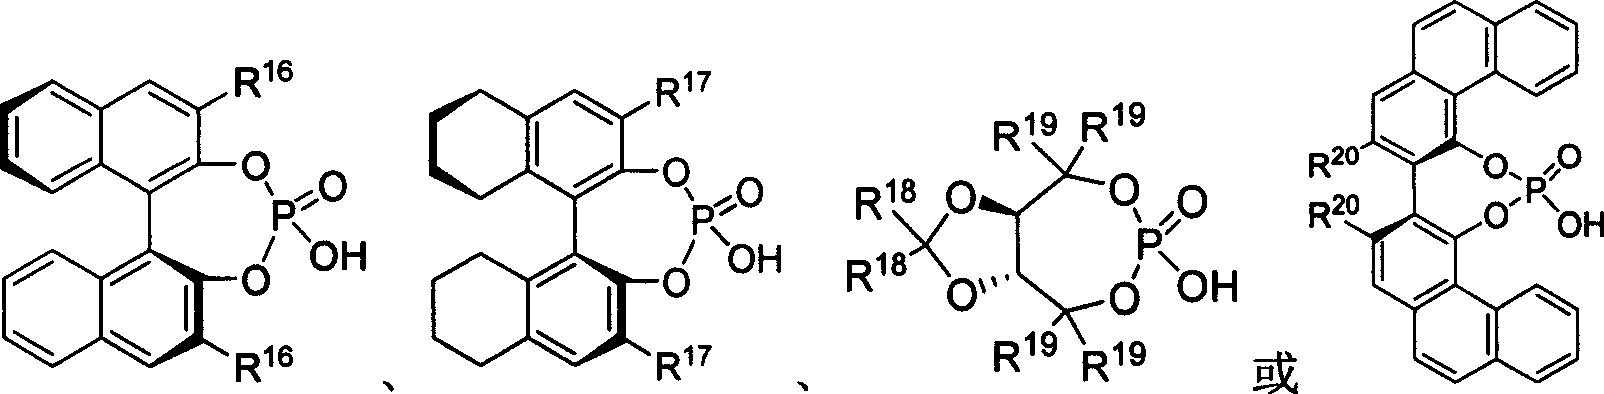 Process of synthesizing 3-methyl amino indole compound